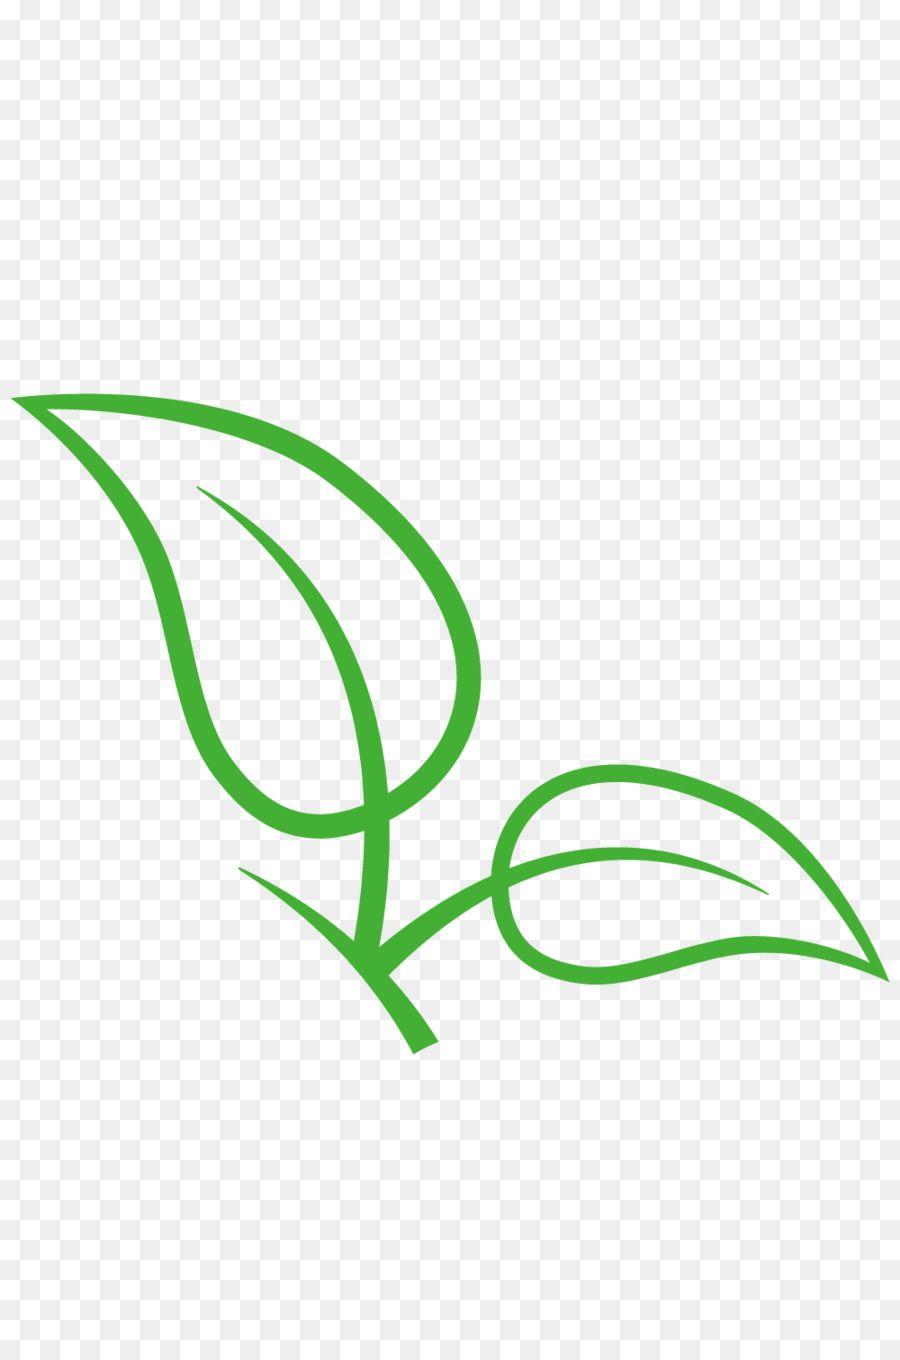 Green and White Square Logo - White tea Fuding Green tea - Green leaves Fuding white tea vector ...